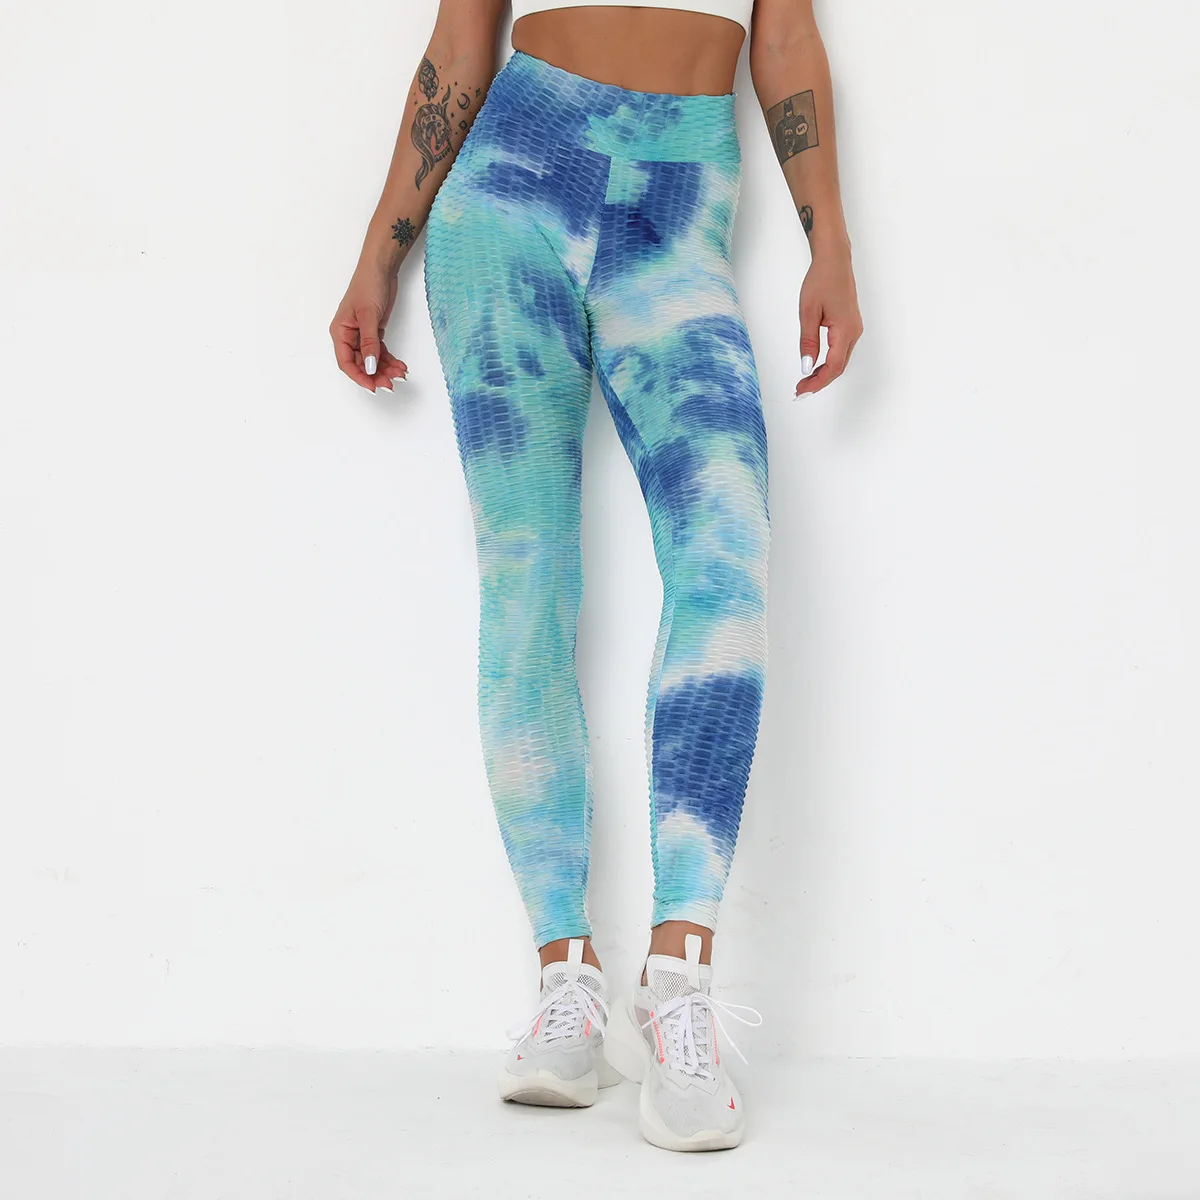 Women's Ink Jacquard Tie Dye Yoga Pants Slim Hip Up Sports Fitness Leggings  for Women Gym Accessories 11 Color XS S M L XL|Leggings| - AliExpress